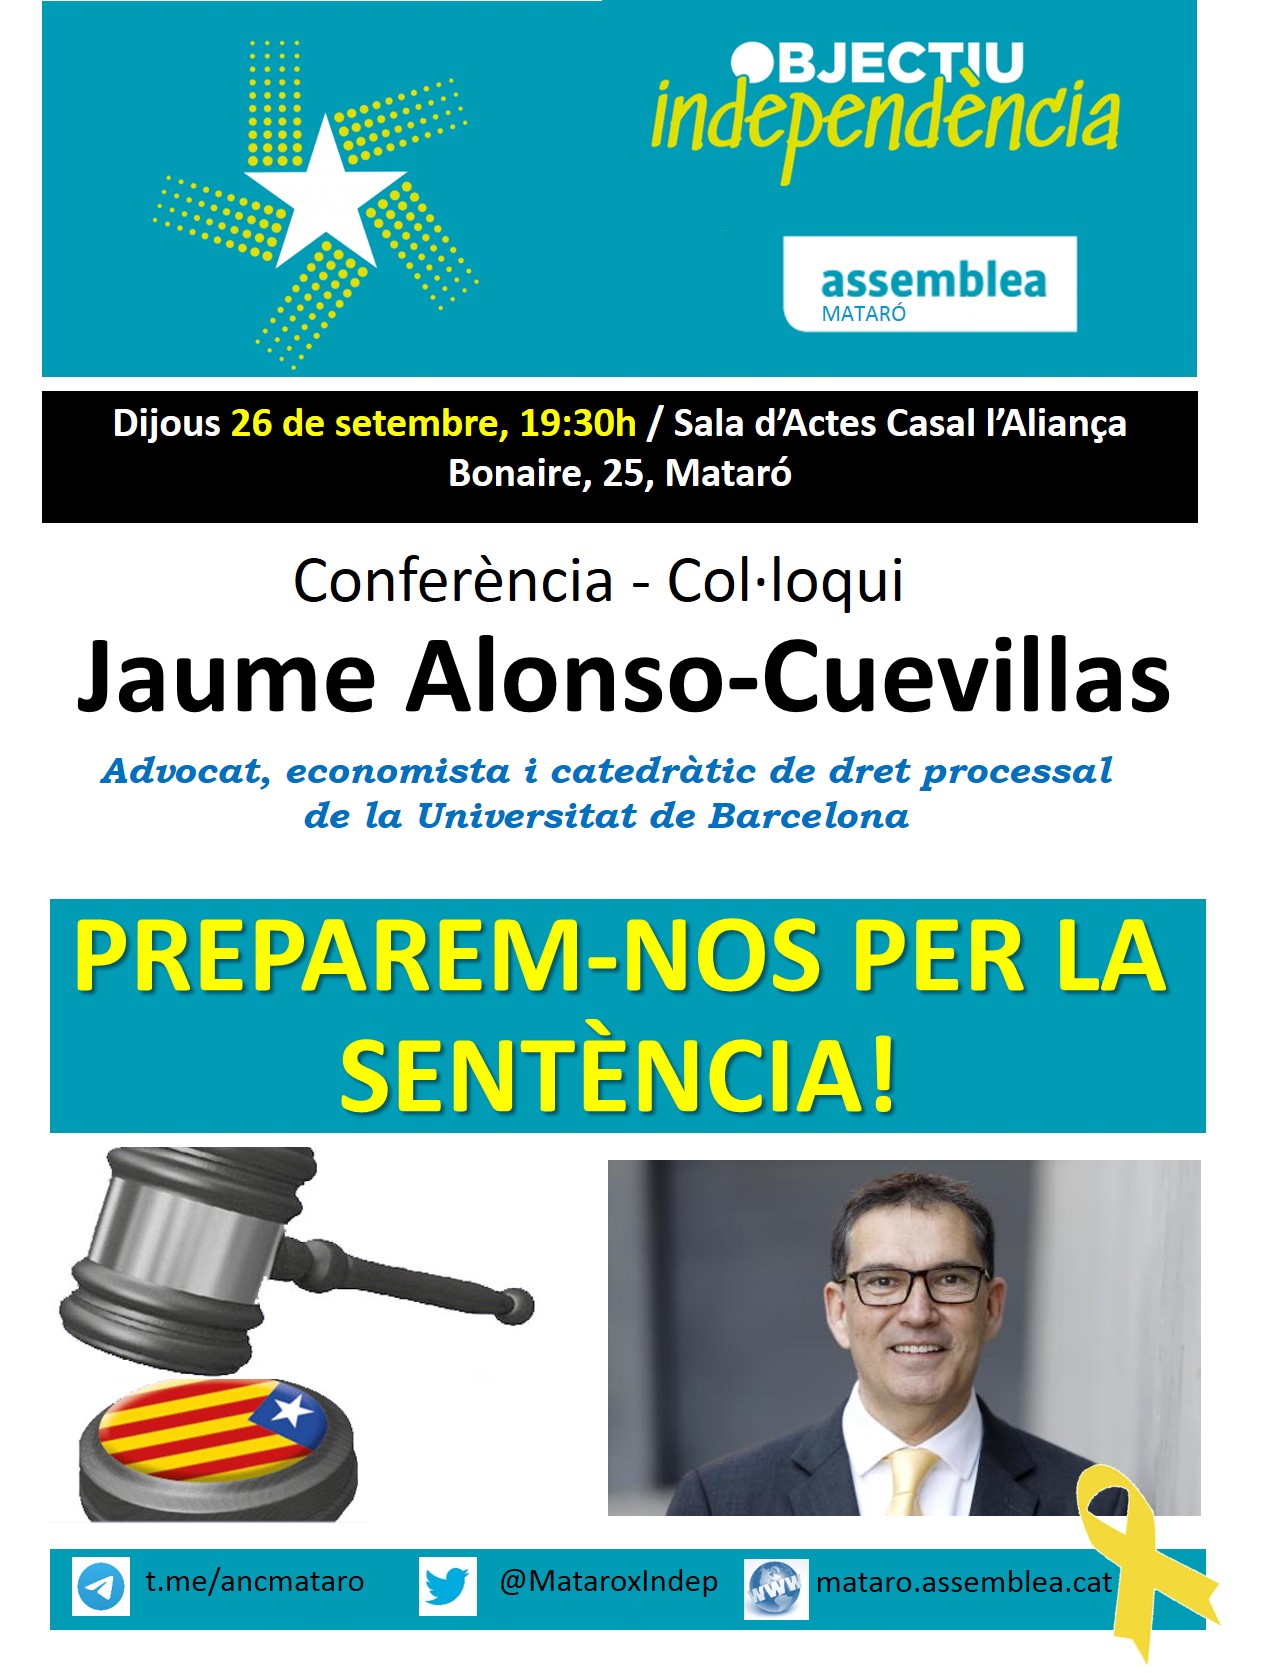 Conferència - Col·loqui amb Jaume Alonso-Cuevillas